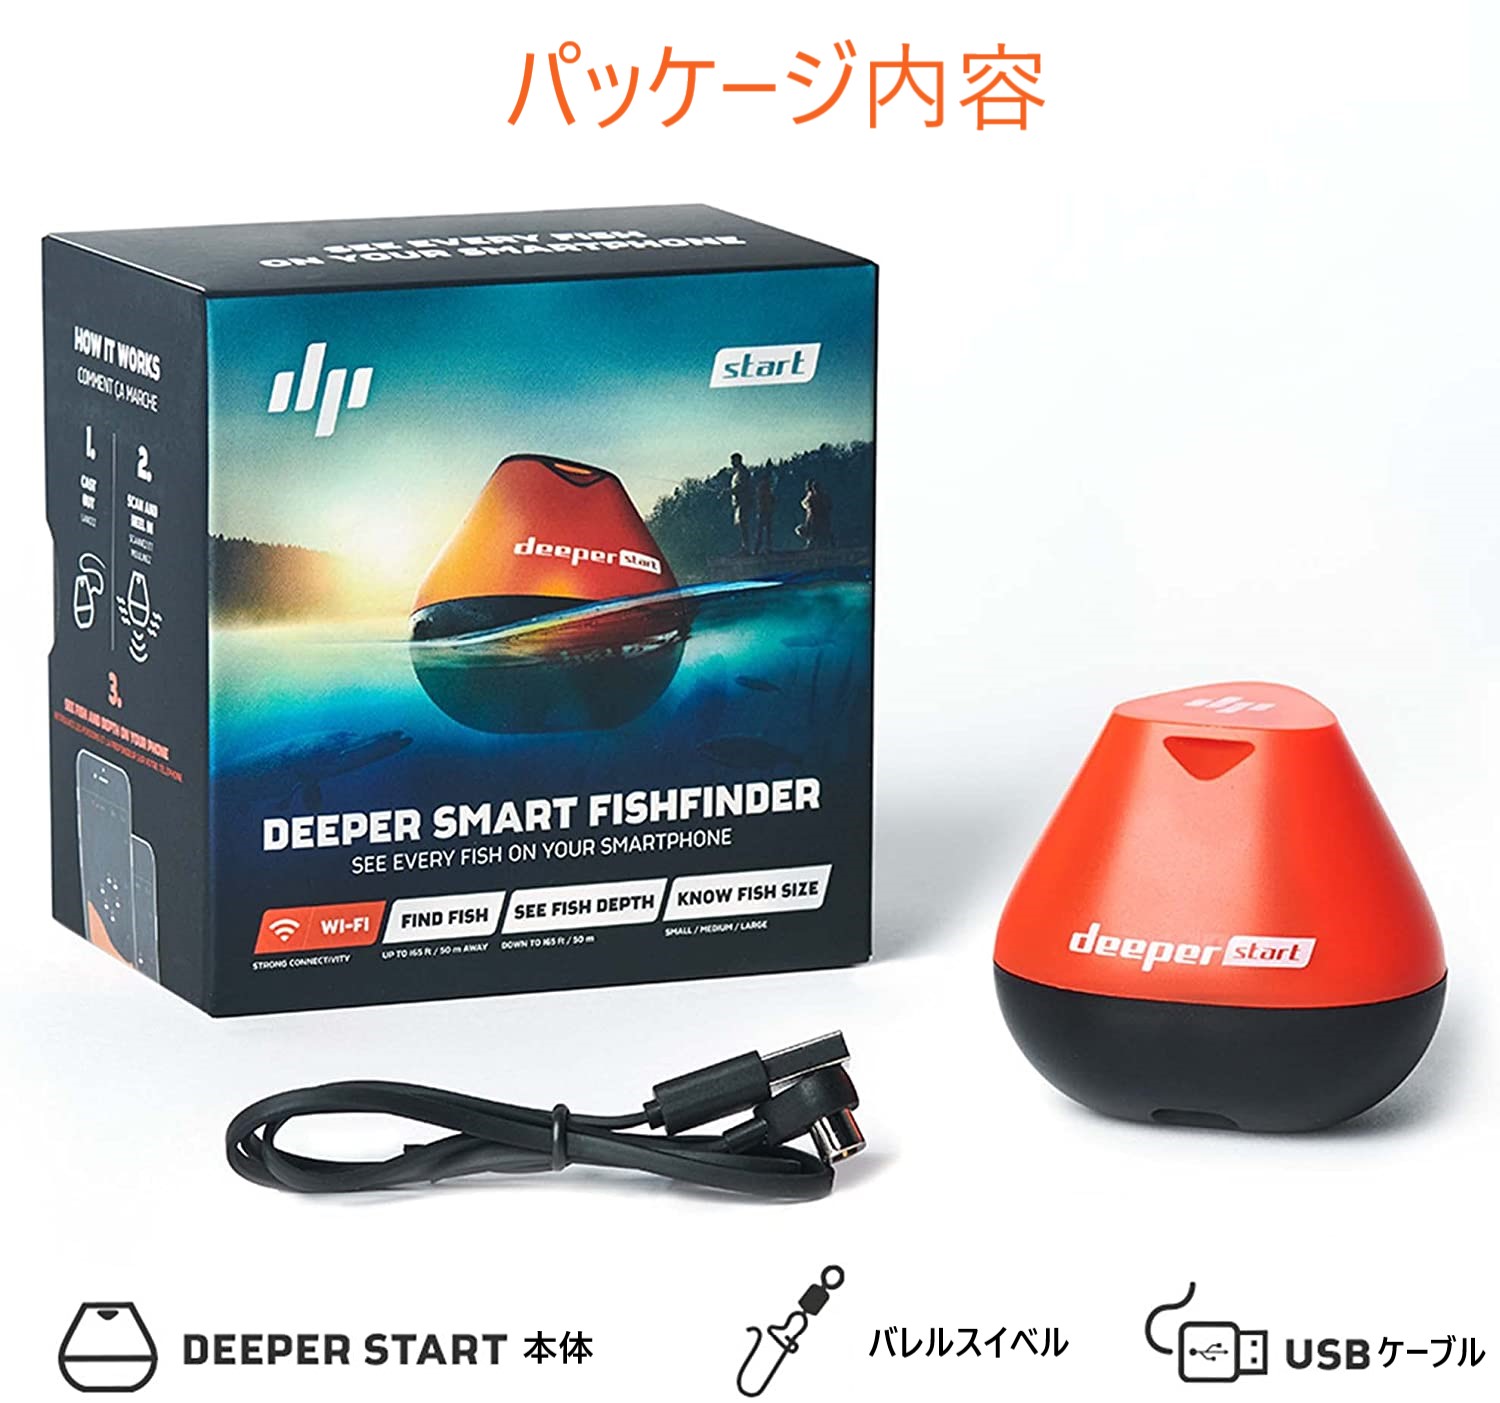 Deeper START魚群探知機 - Deeper Smart Sonar | ディーパー スマート 